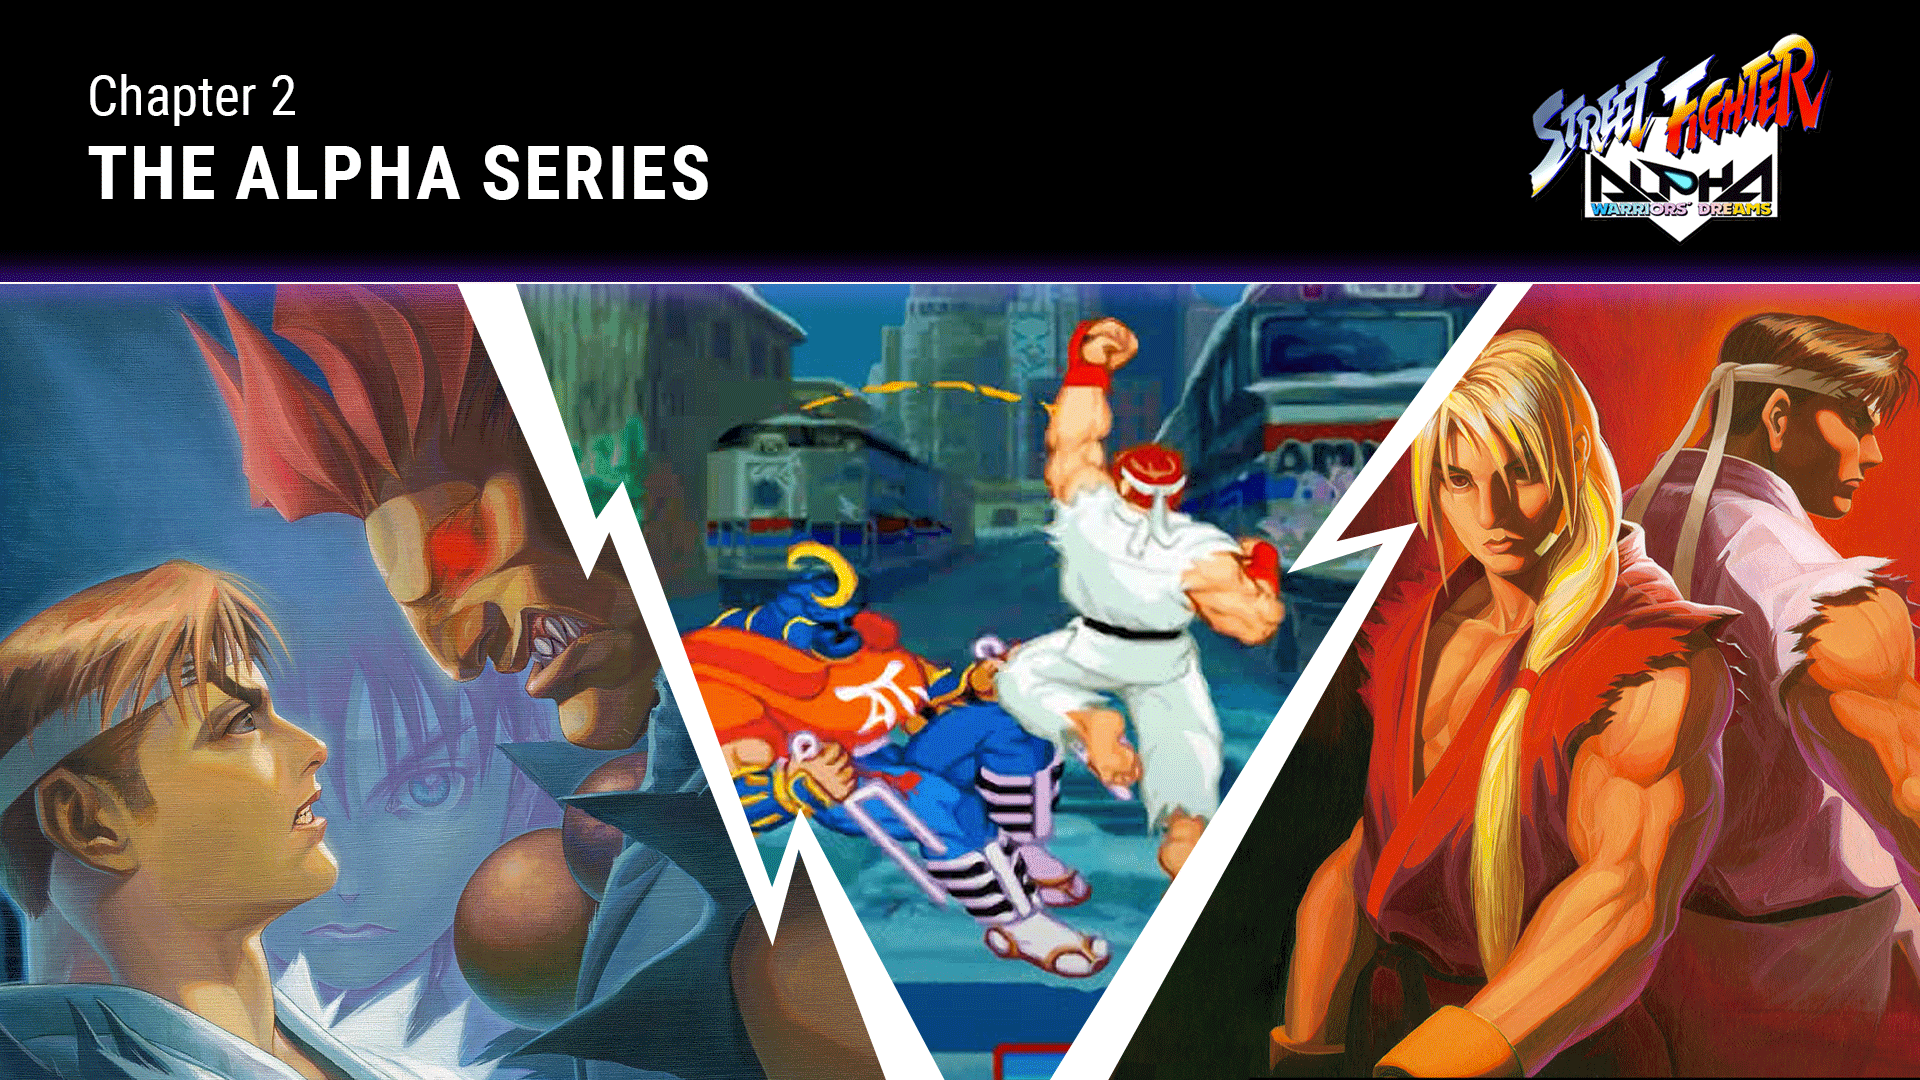 Street Fighter Alpha 2 ryu Vs. Sagat 3D Shadow Box for 